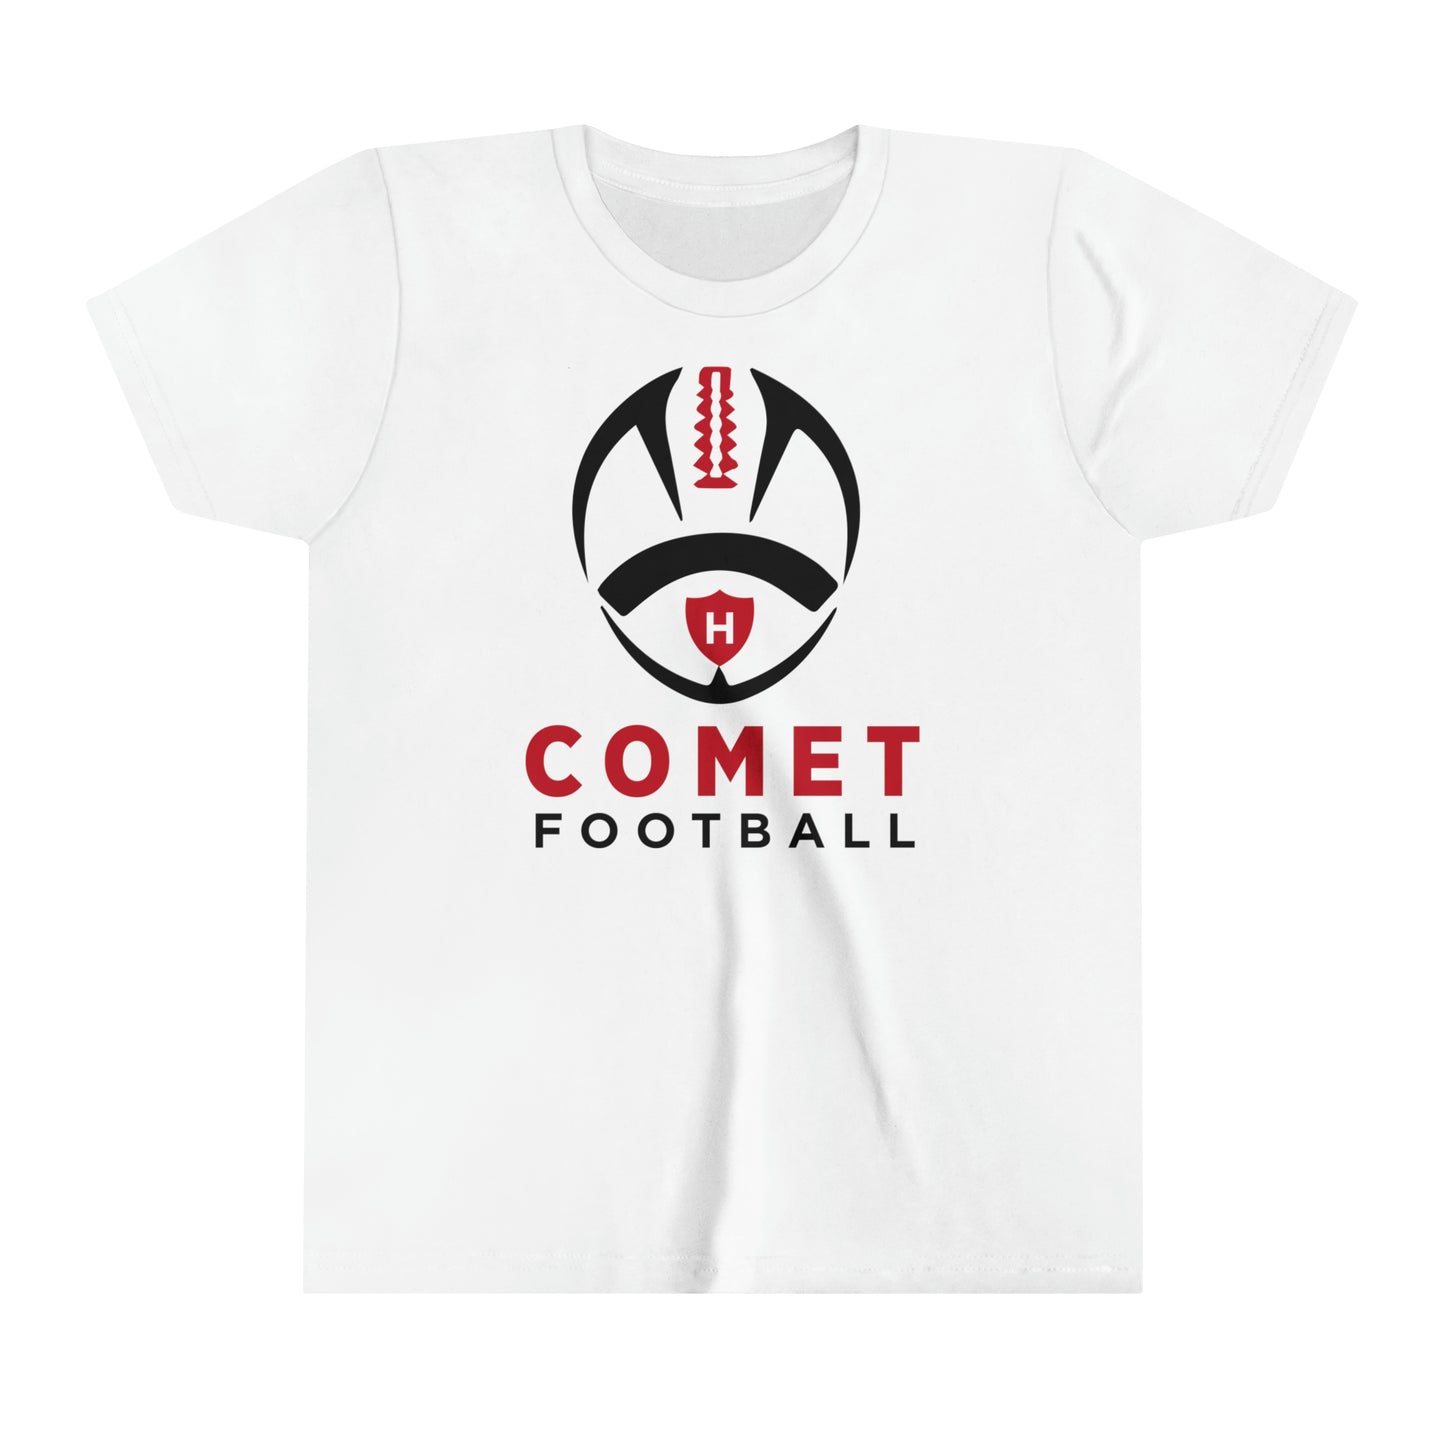 Comet Football - Youth Short Sleeve Tee